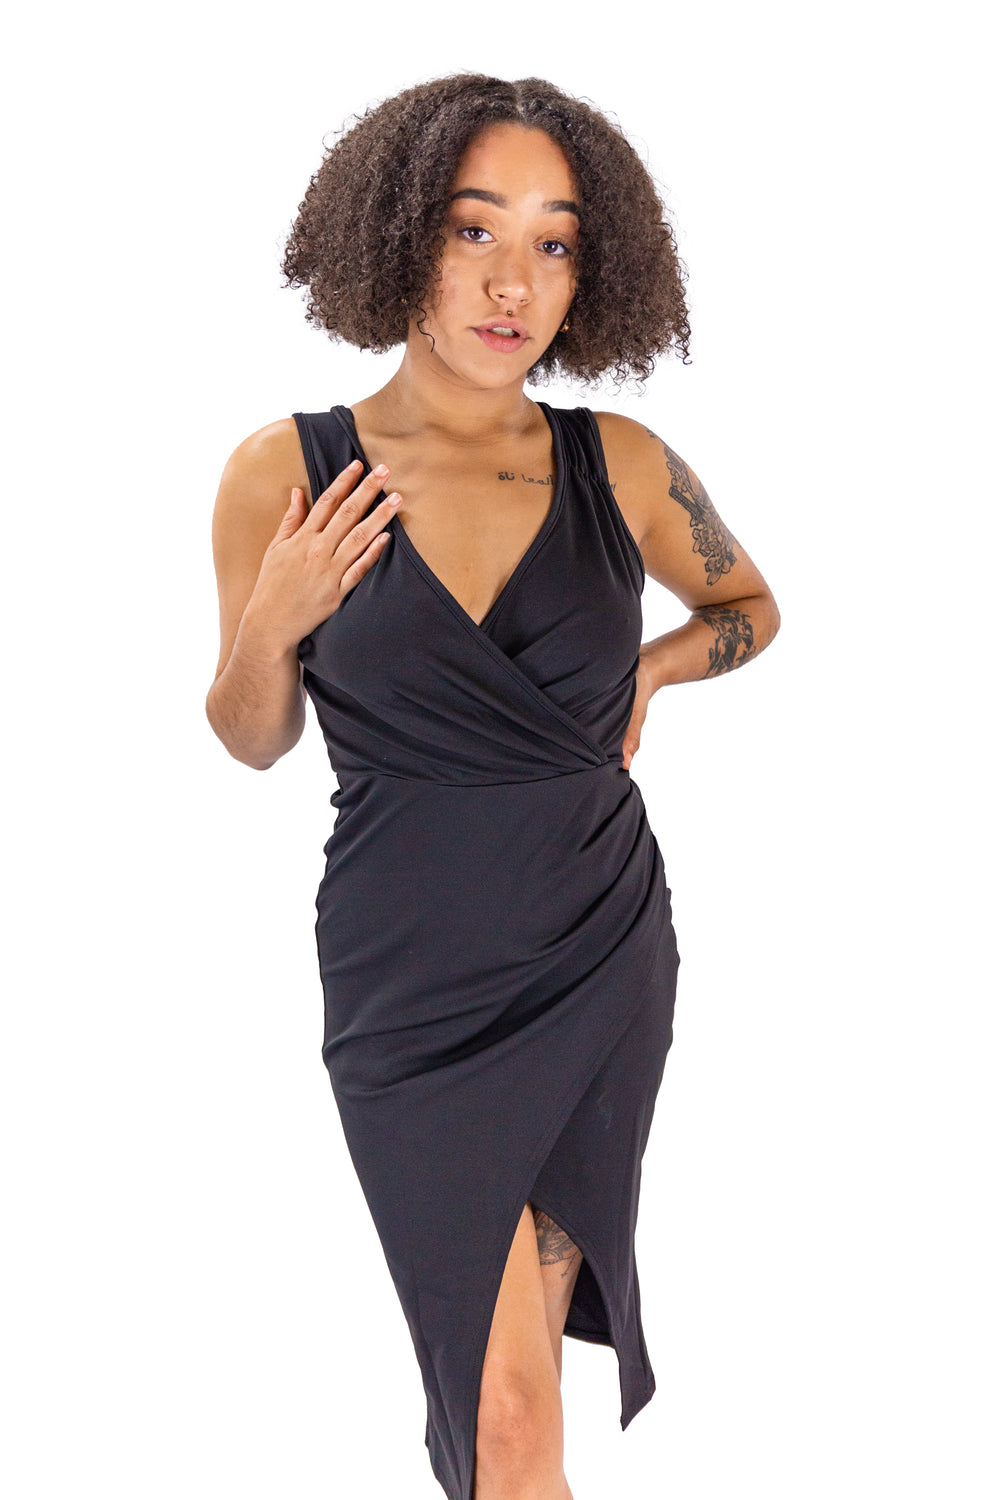 Slim-fit Sleek Affair Casual Black Dress